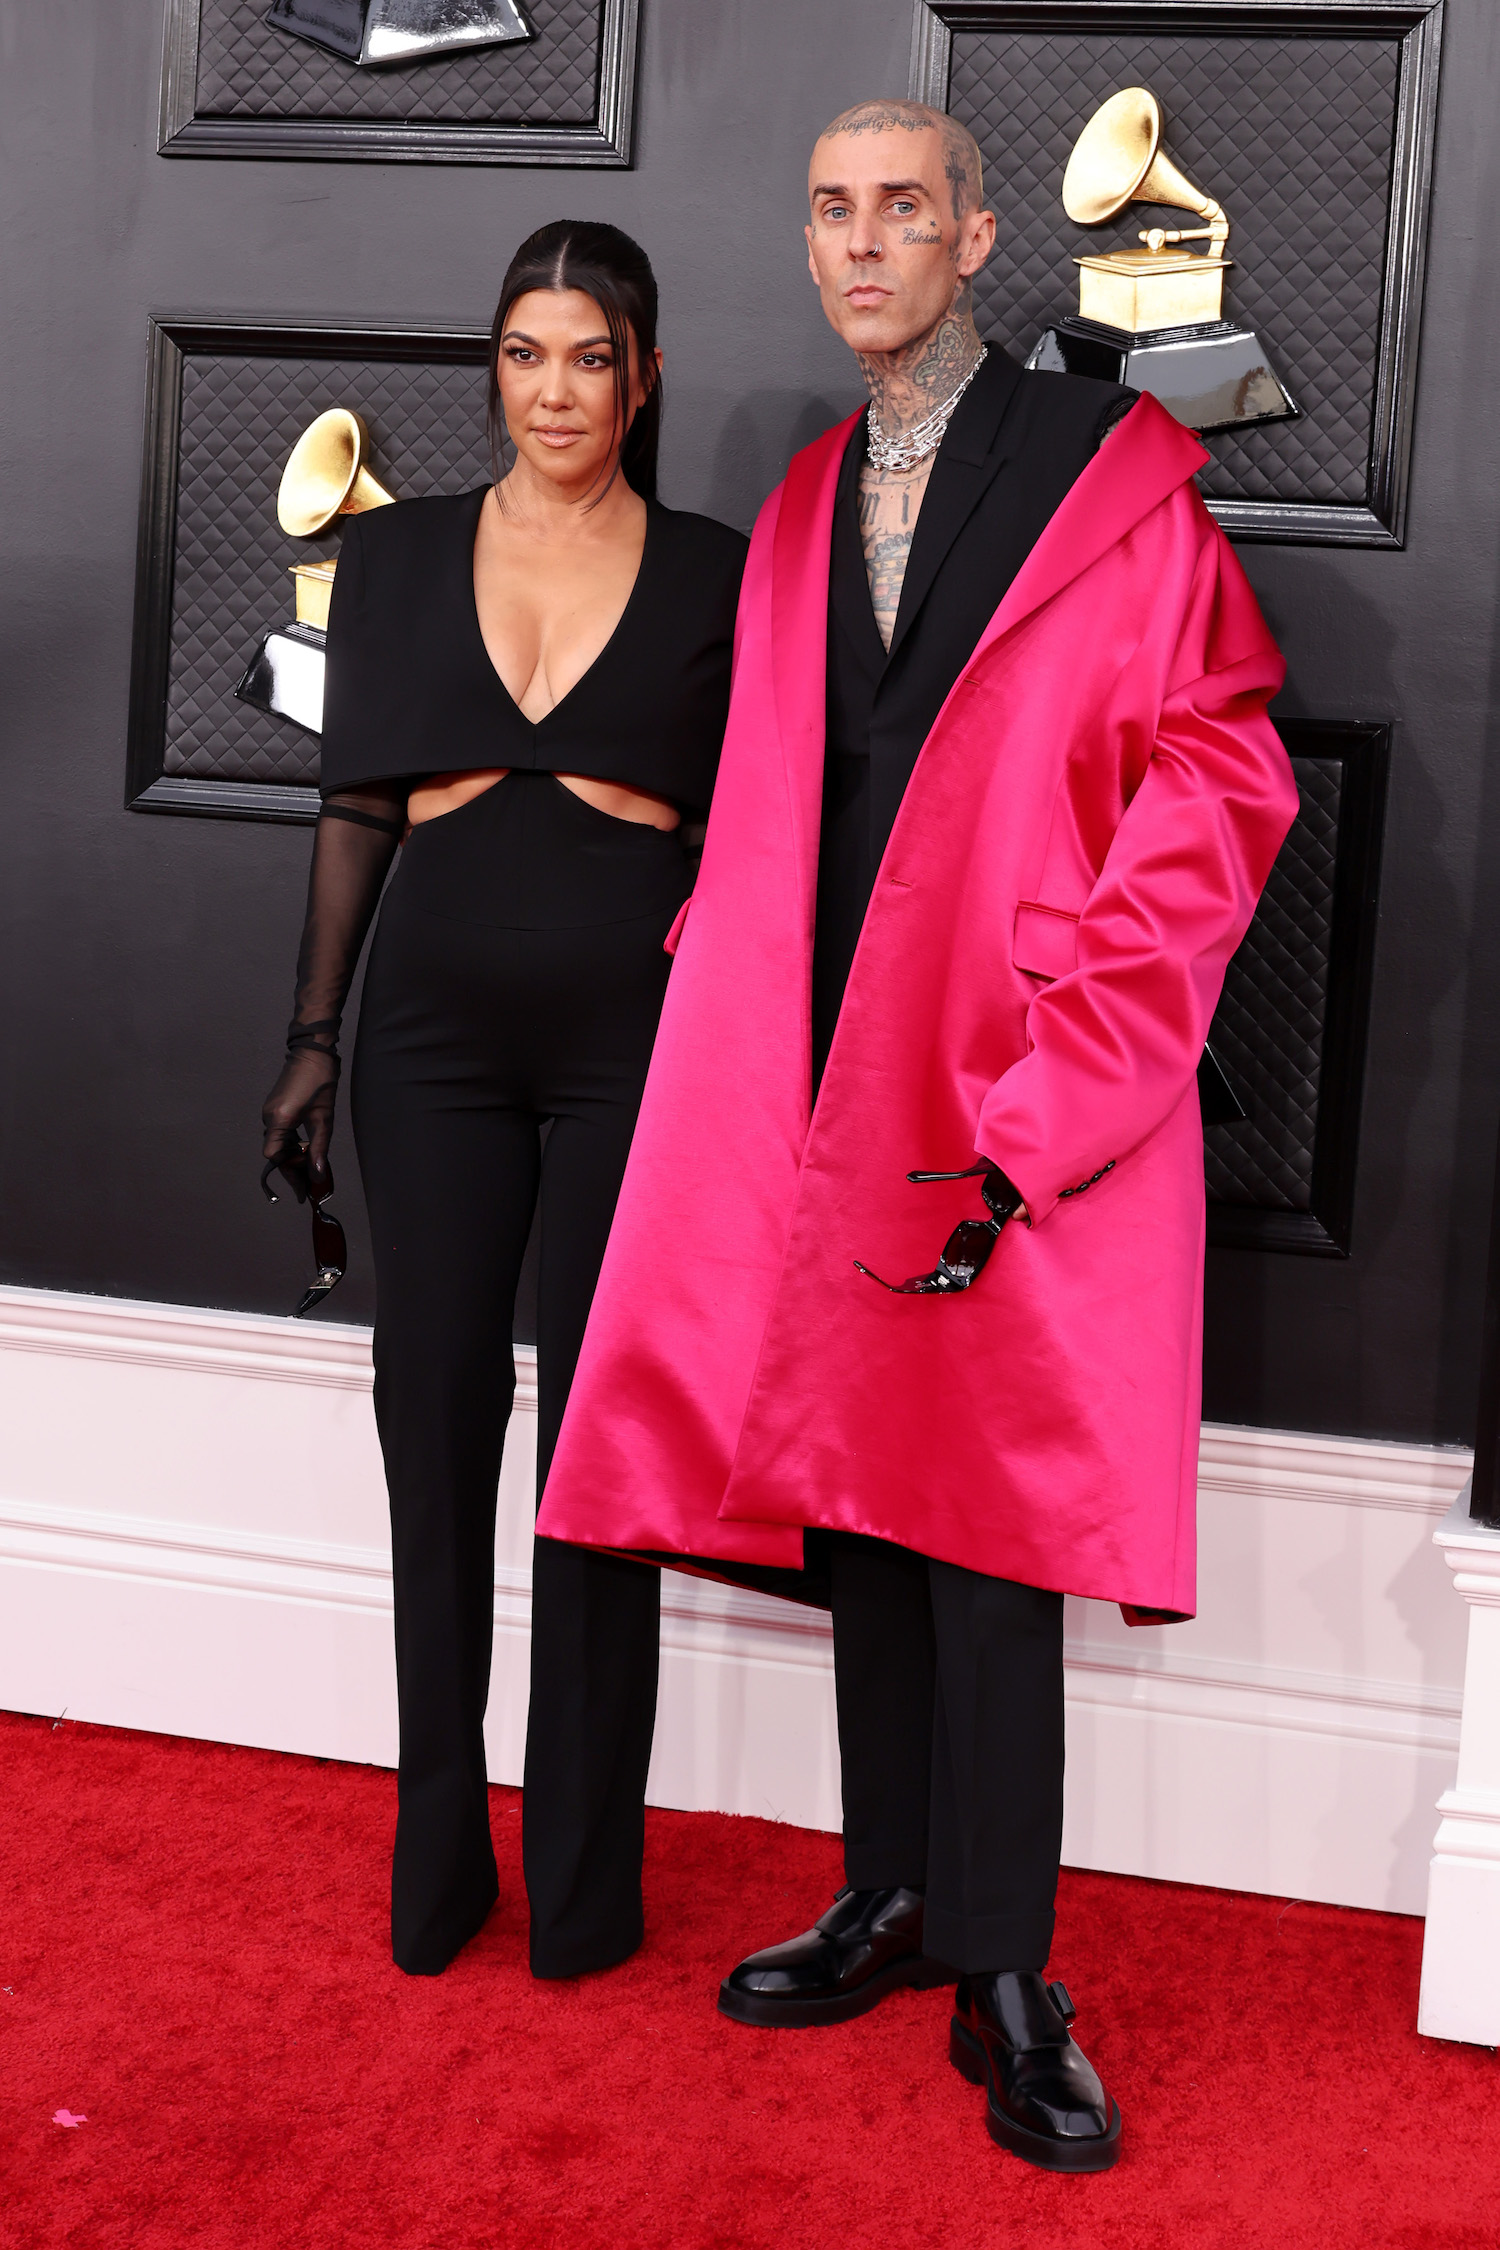 Kourtney Kardashian and Travis Barker at the Grammys 2022